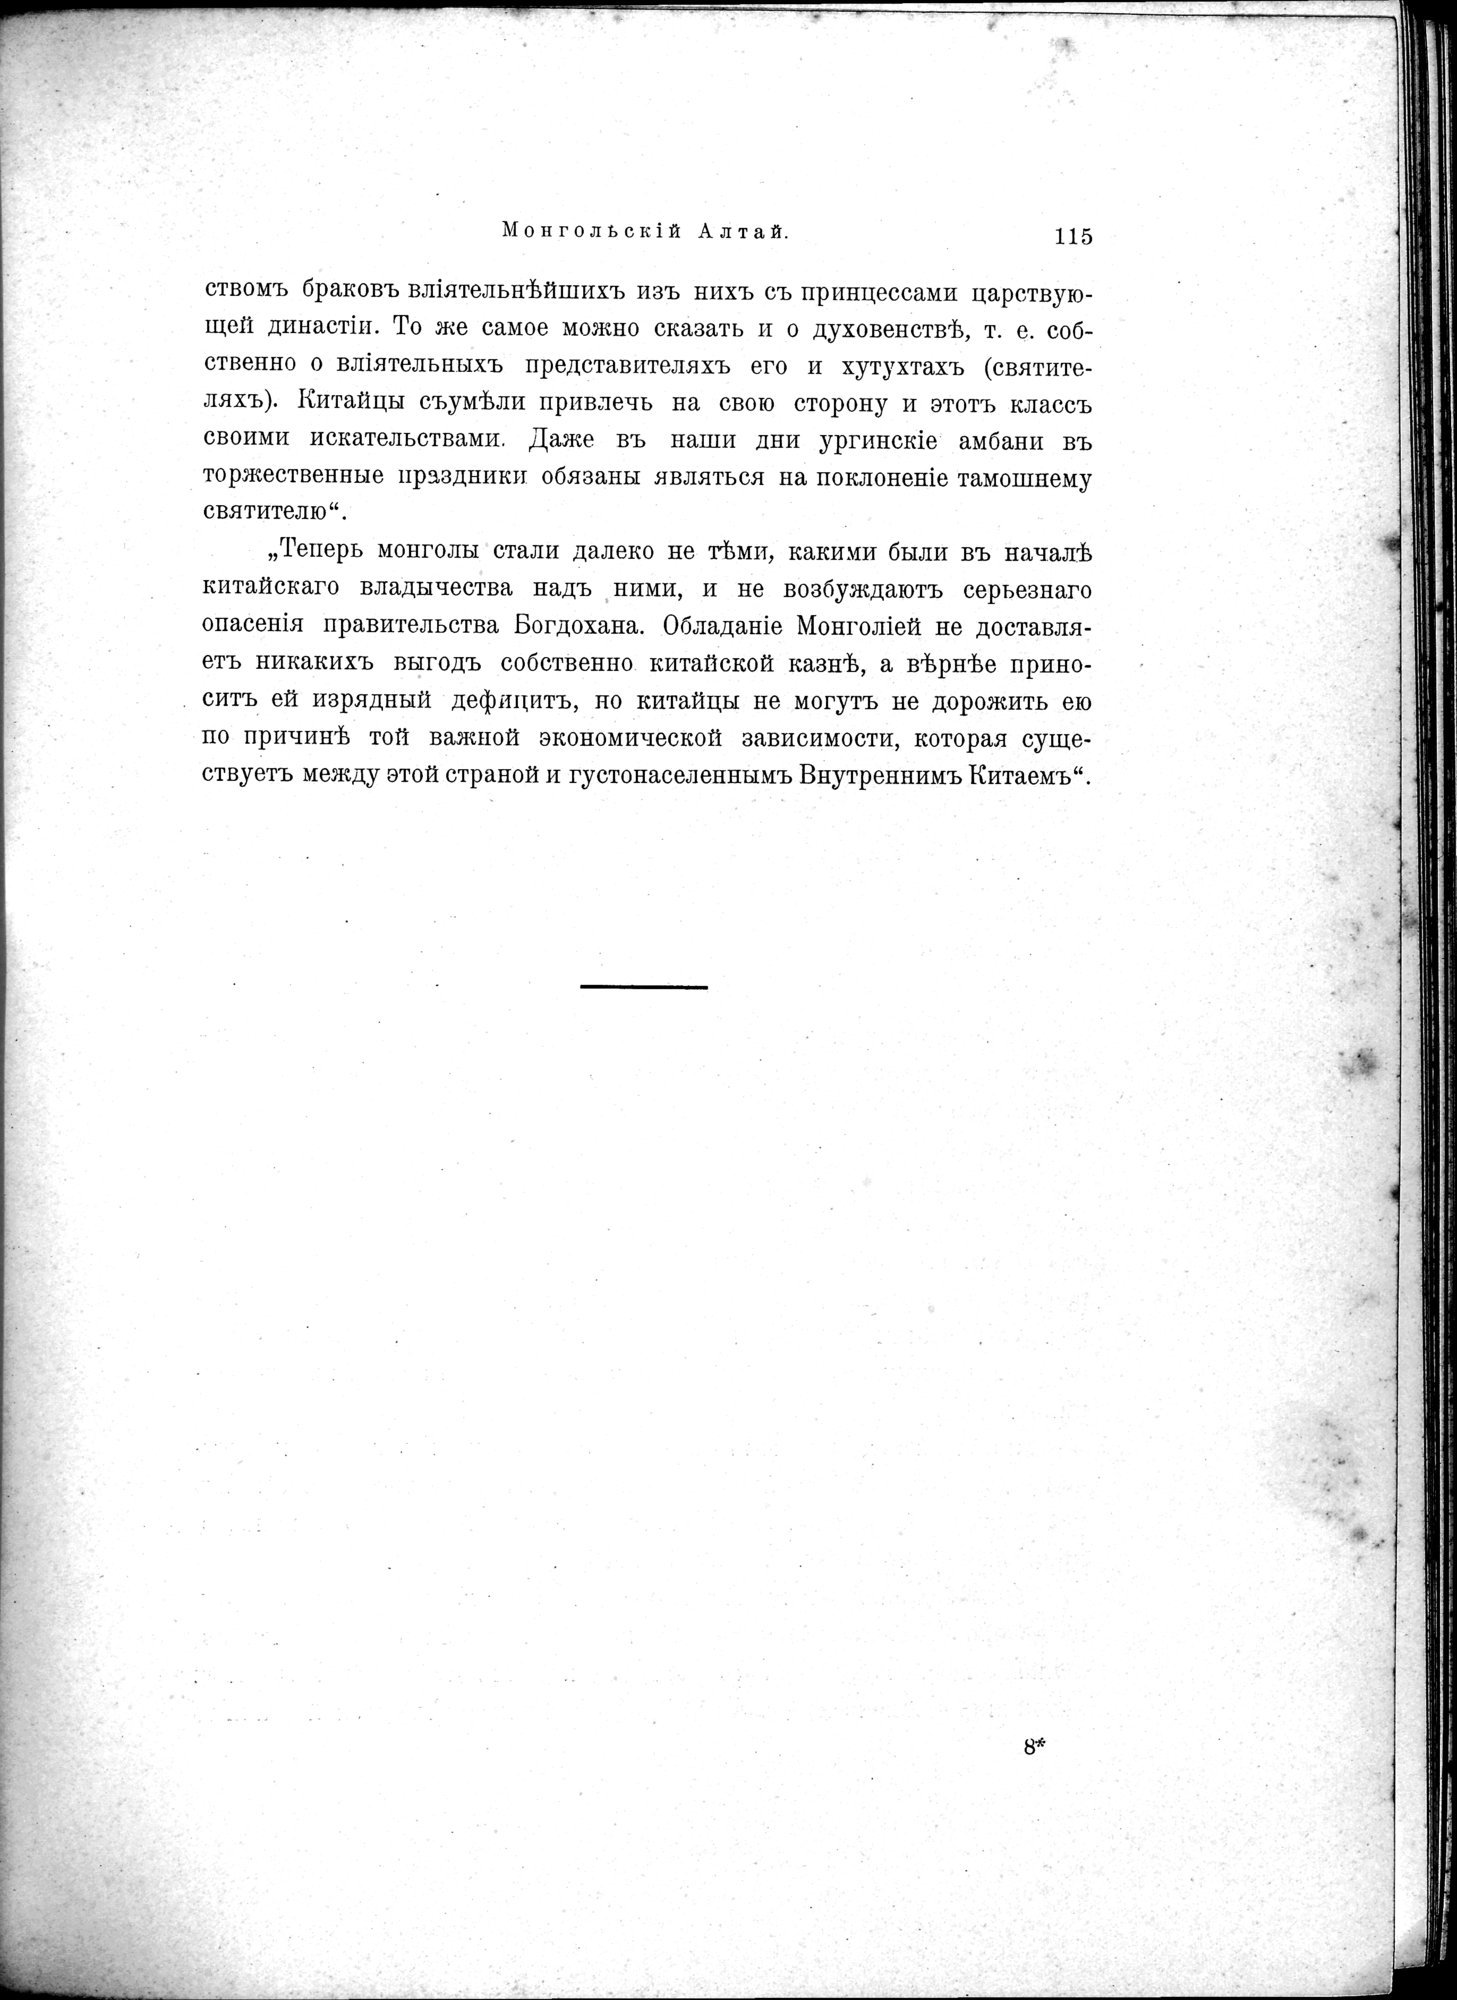 Mongoliia i Kam : vol.1 / Page 149 (Grayscale High Resolution Image)